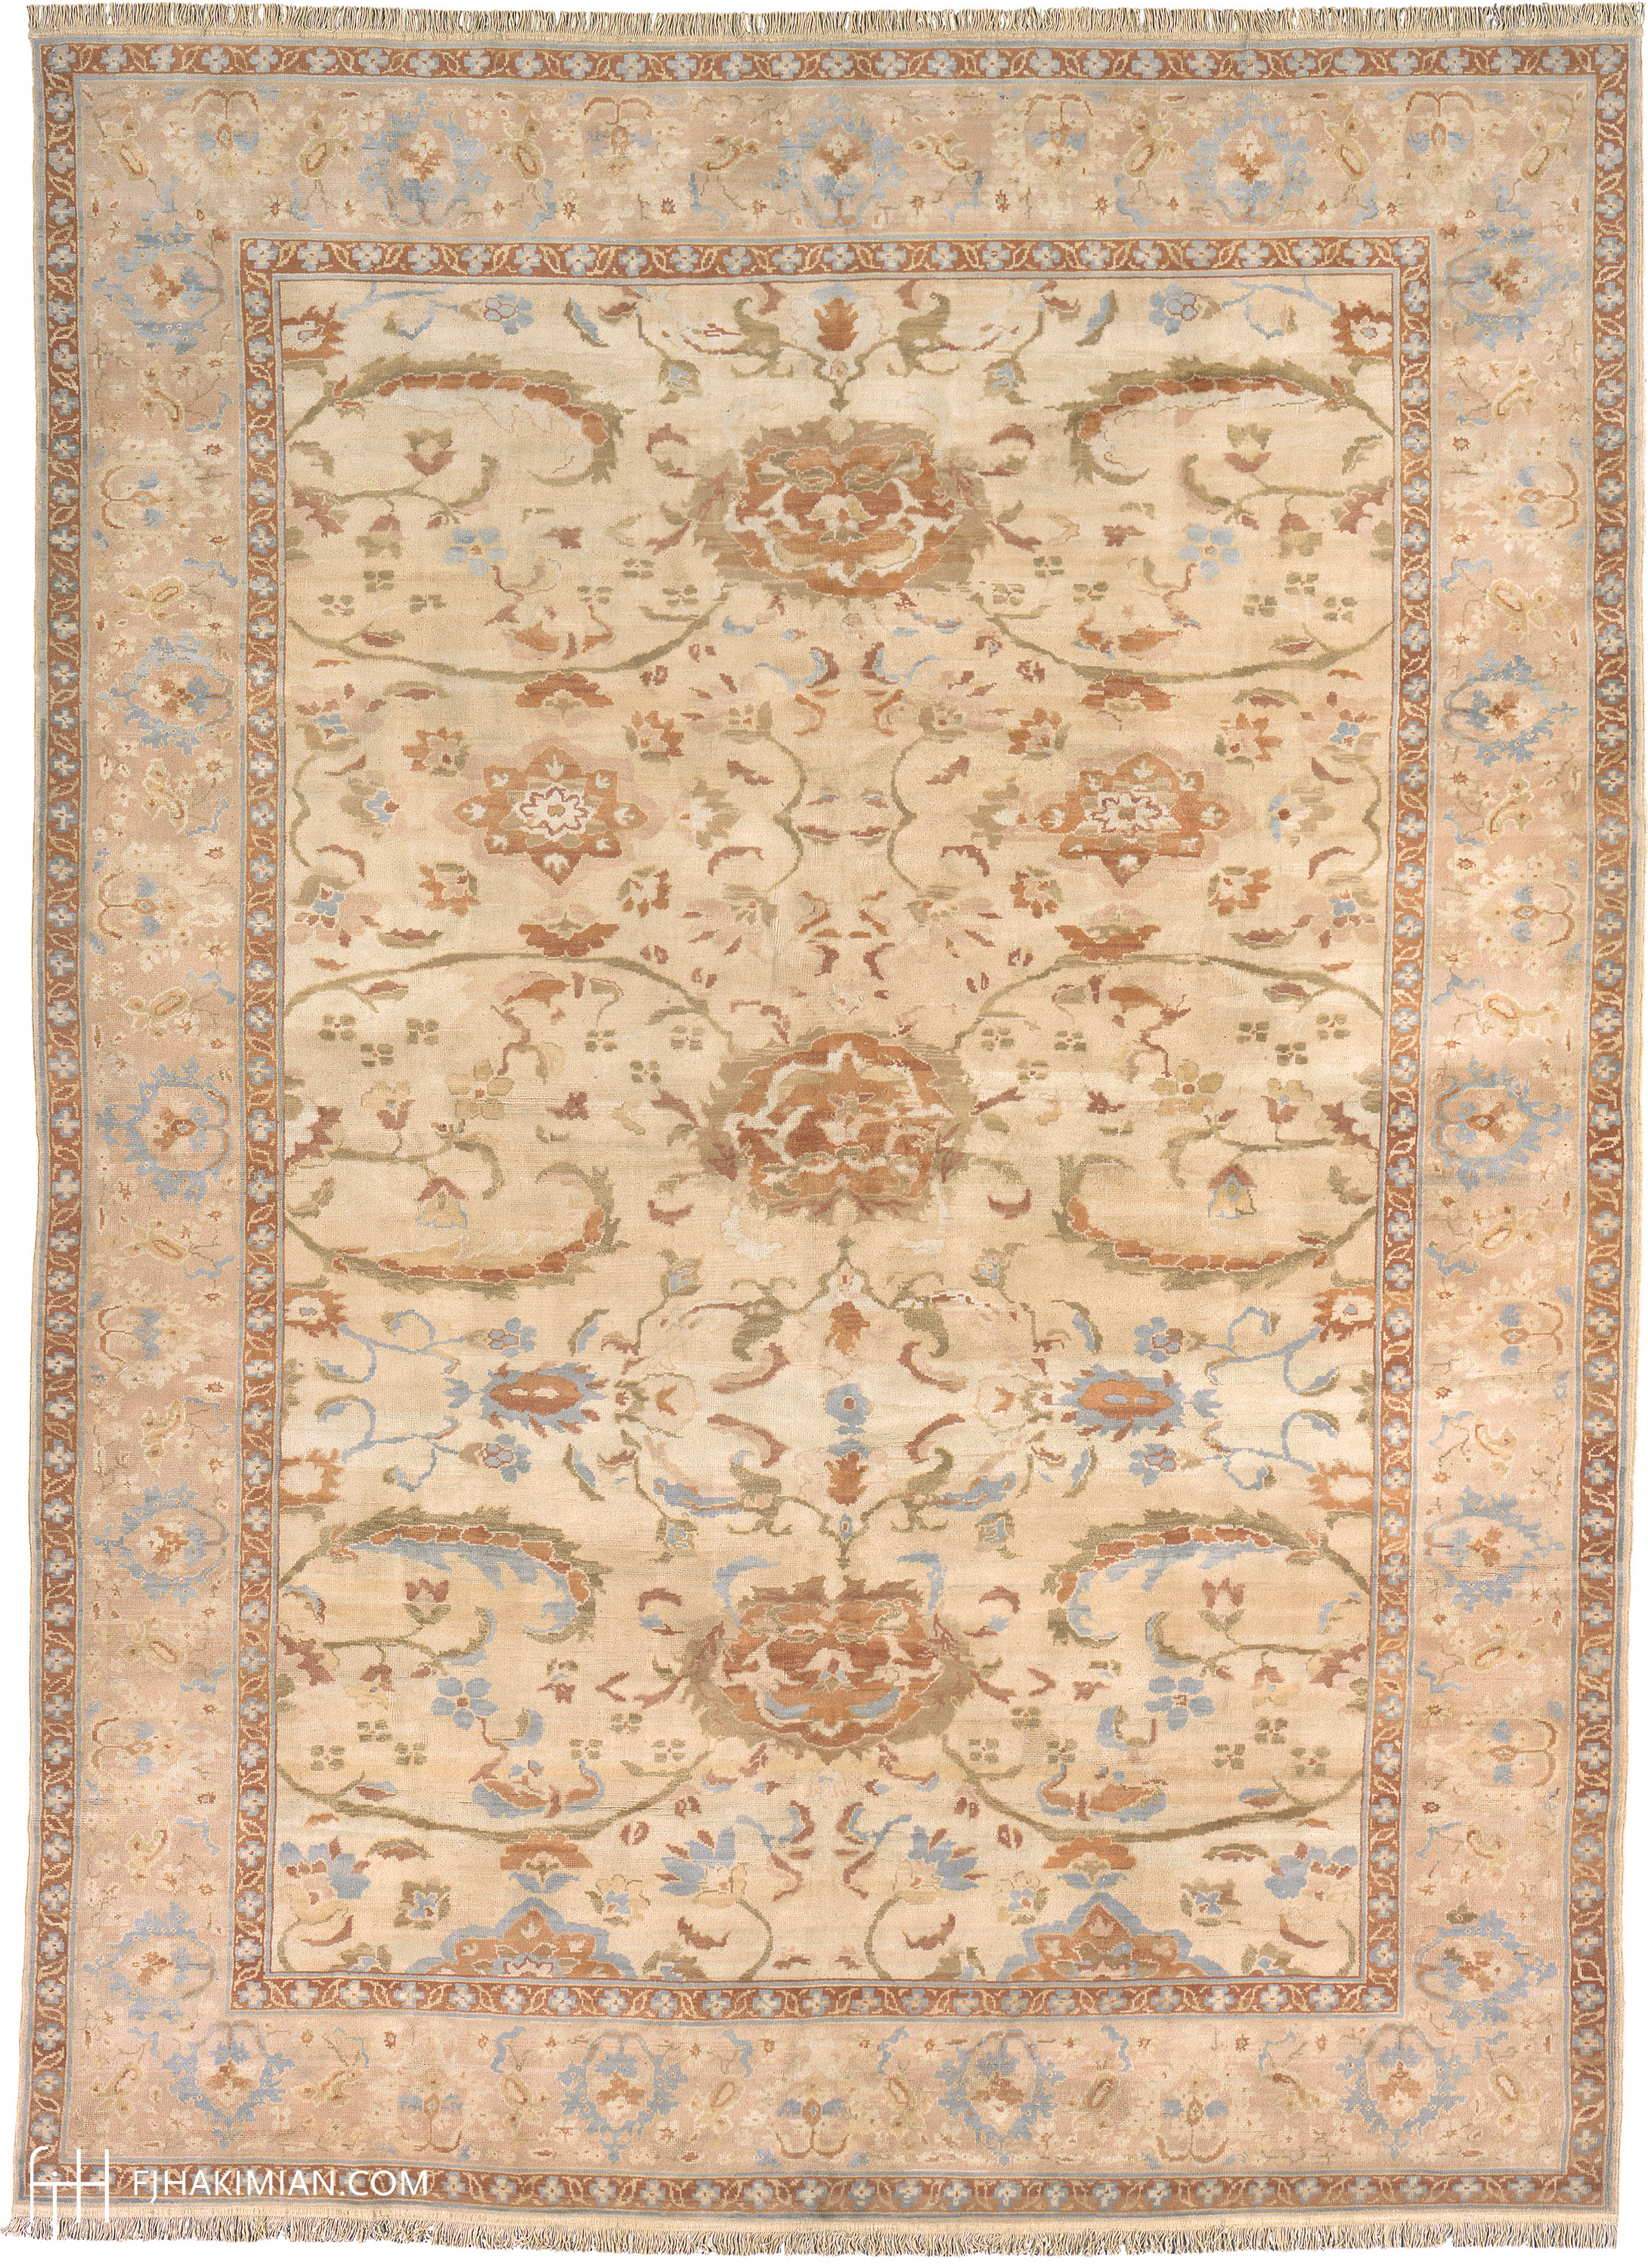 Three Flowers Design | Custom Traditional Carpet | FJ Hakimian | Carpet Gallery in NY